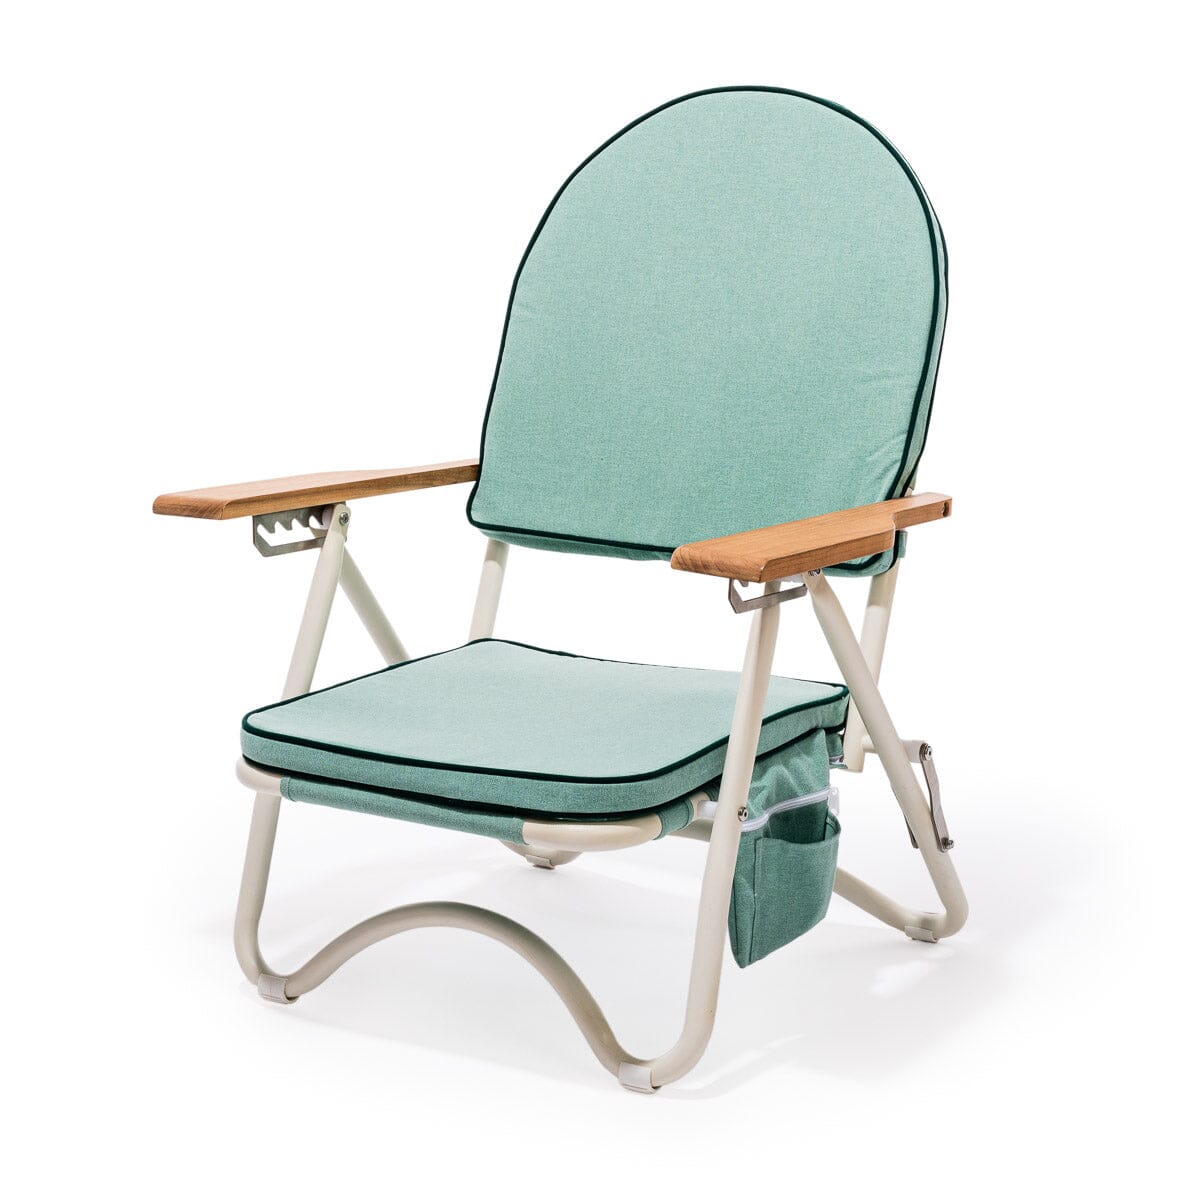 The Pam Chair - Rivie Green Pam Chair Business & Pleasure Co Aus 